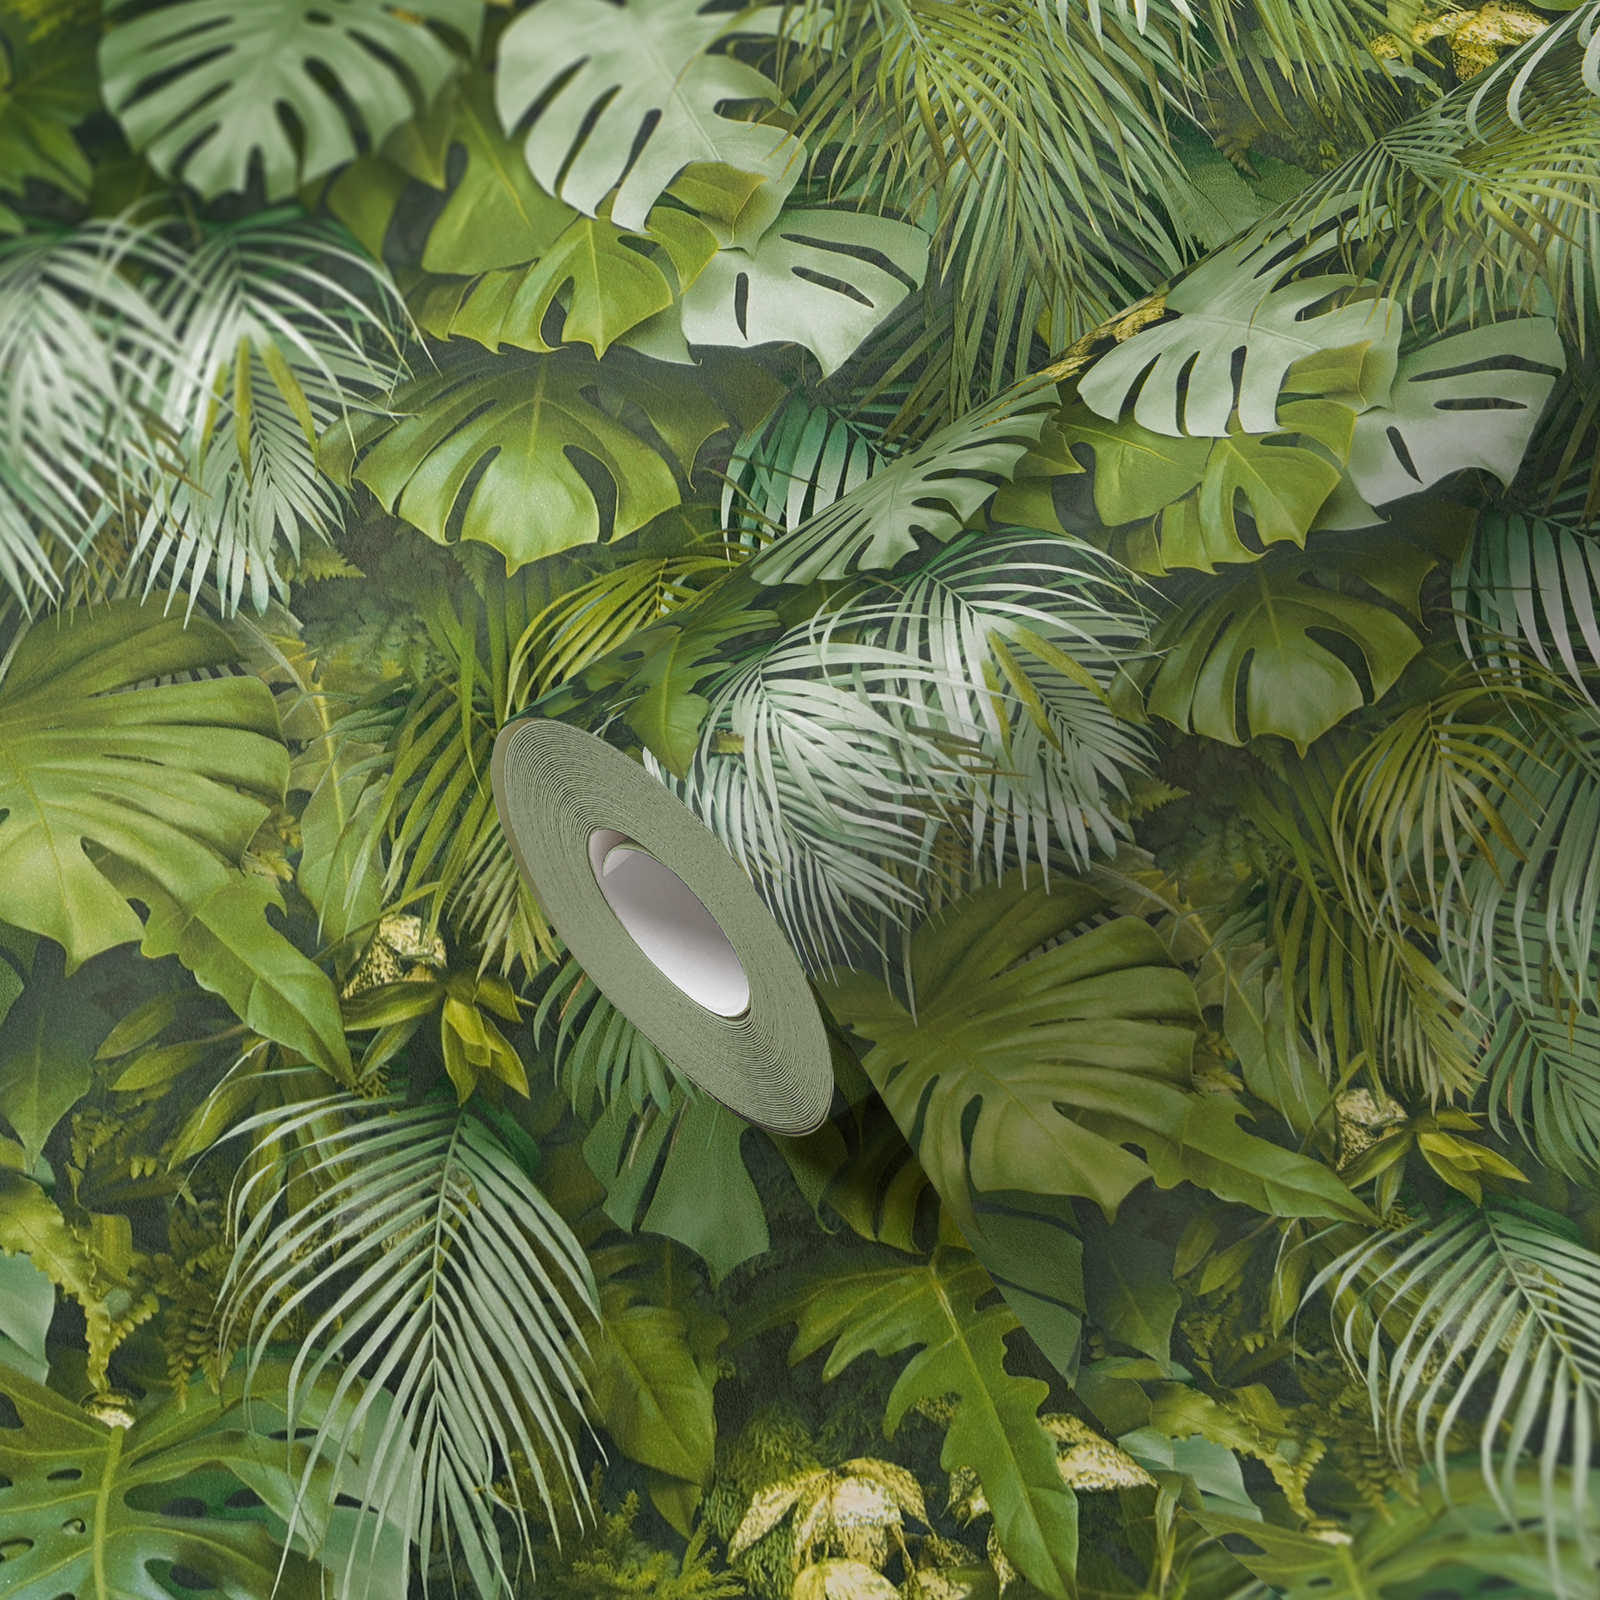             Self-adhesive wallpaper | jungle pattern in 3D look - green
        